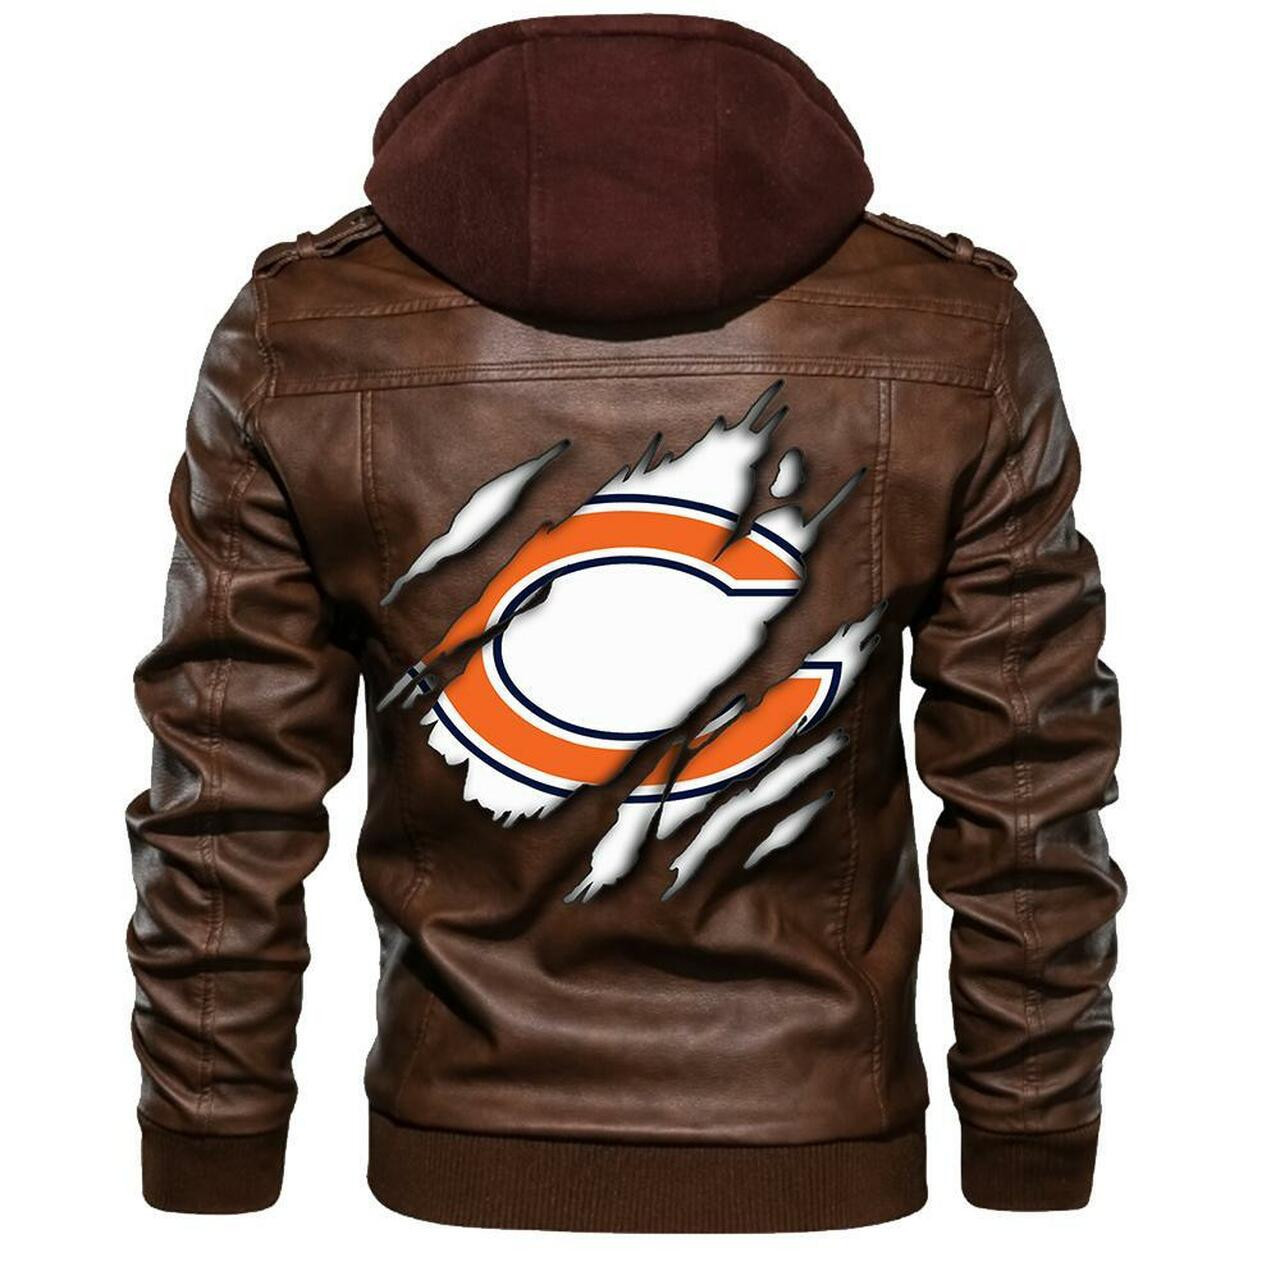 Top leather jacket Sells Best on Techcomshop 144